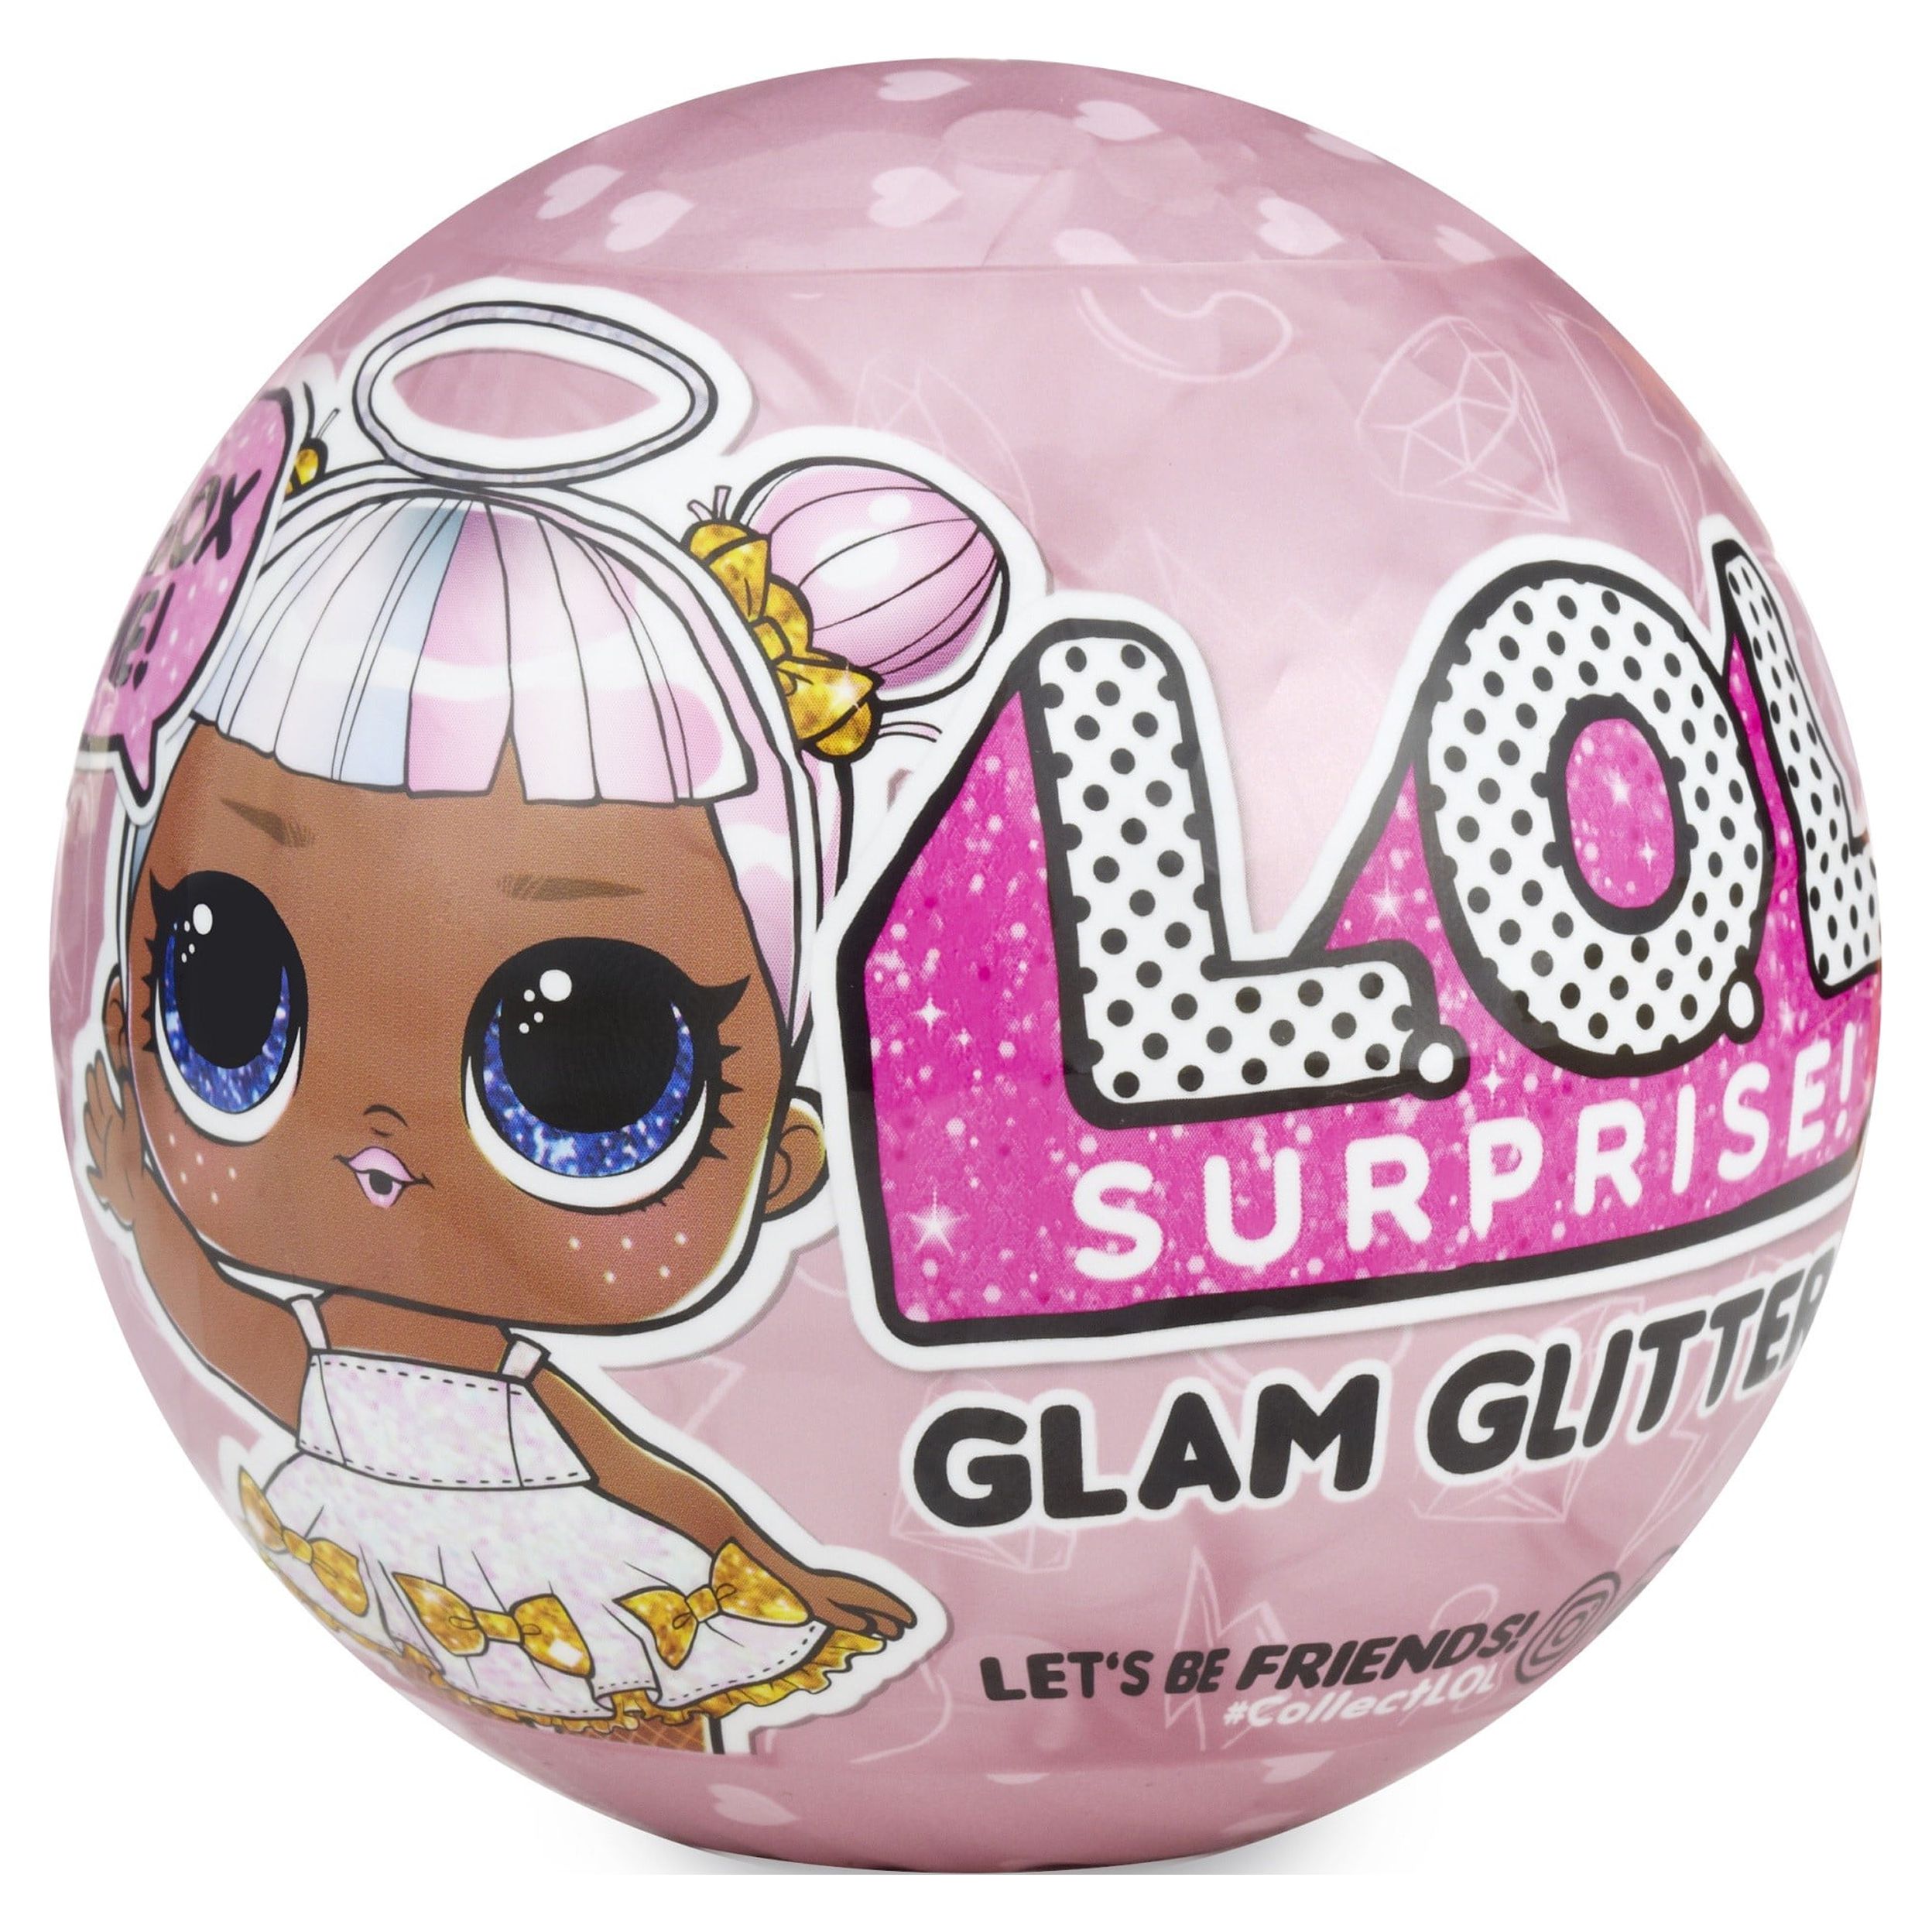 L.O.L. Surprise! Glam Glitter Doll - image 1 of 4